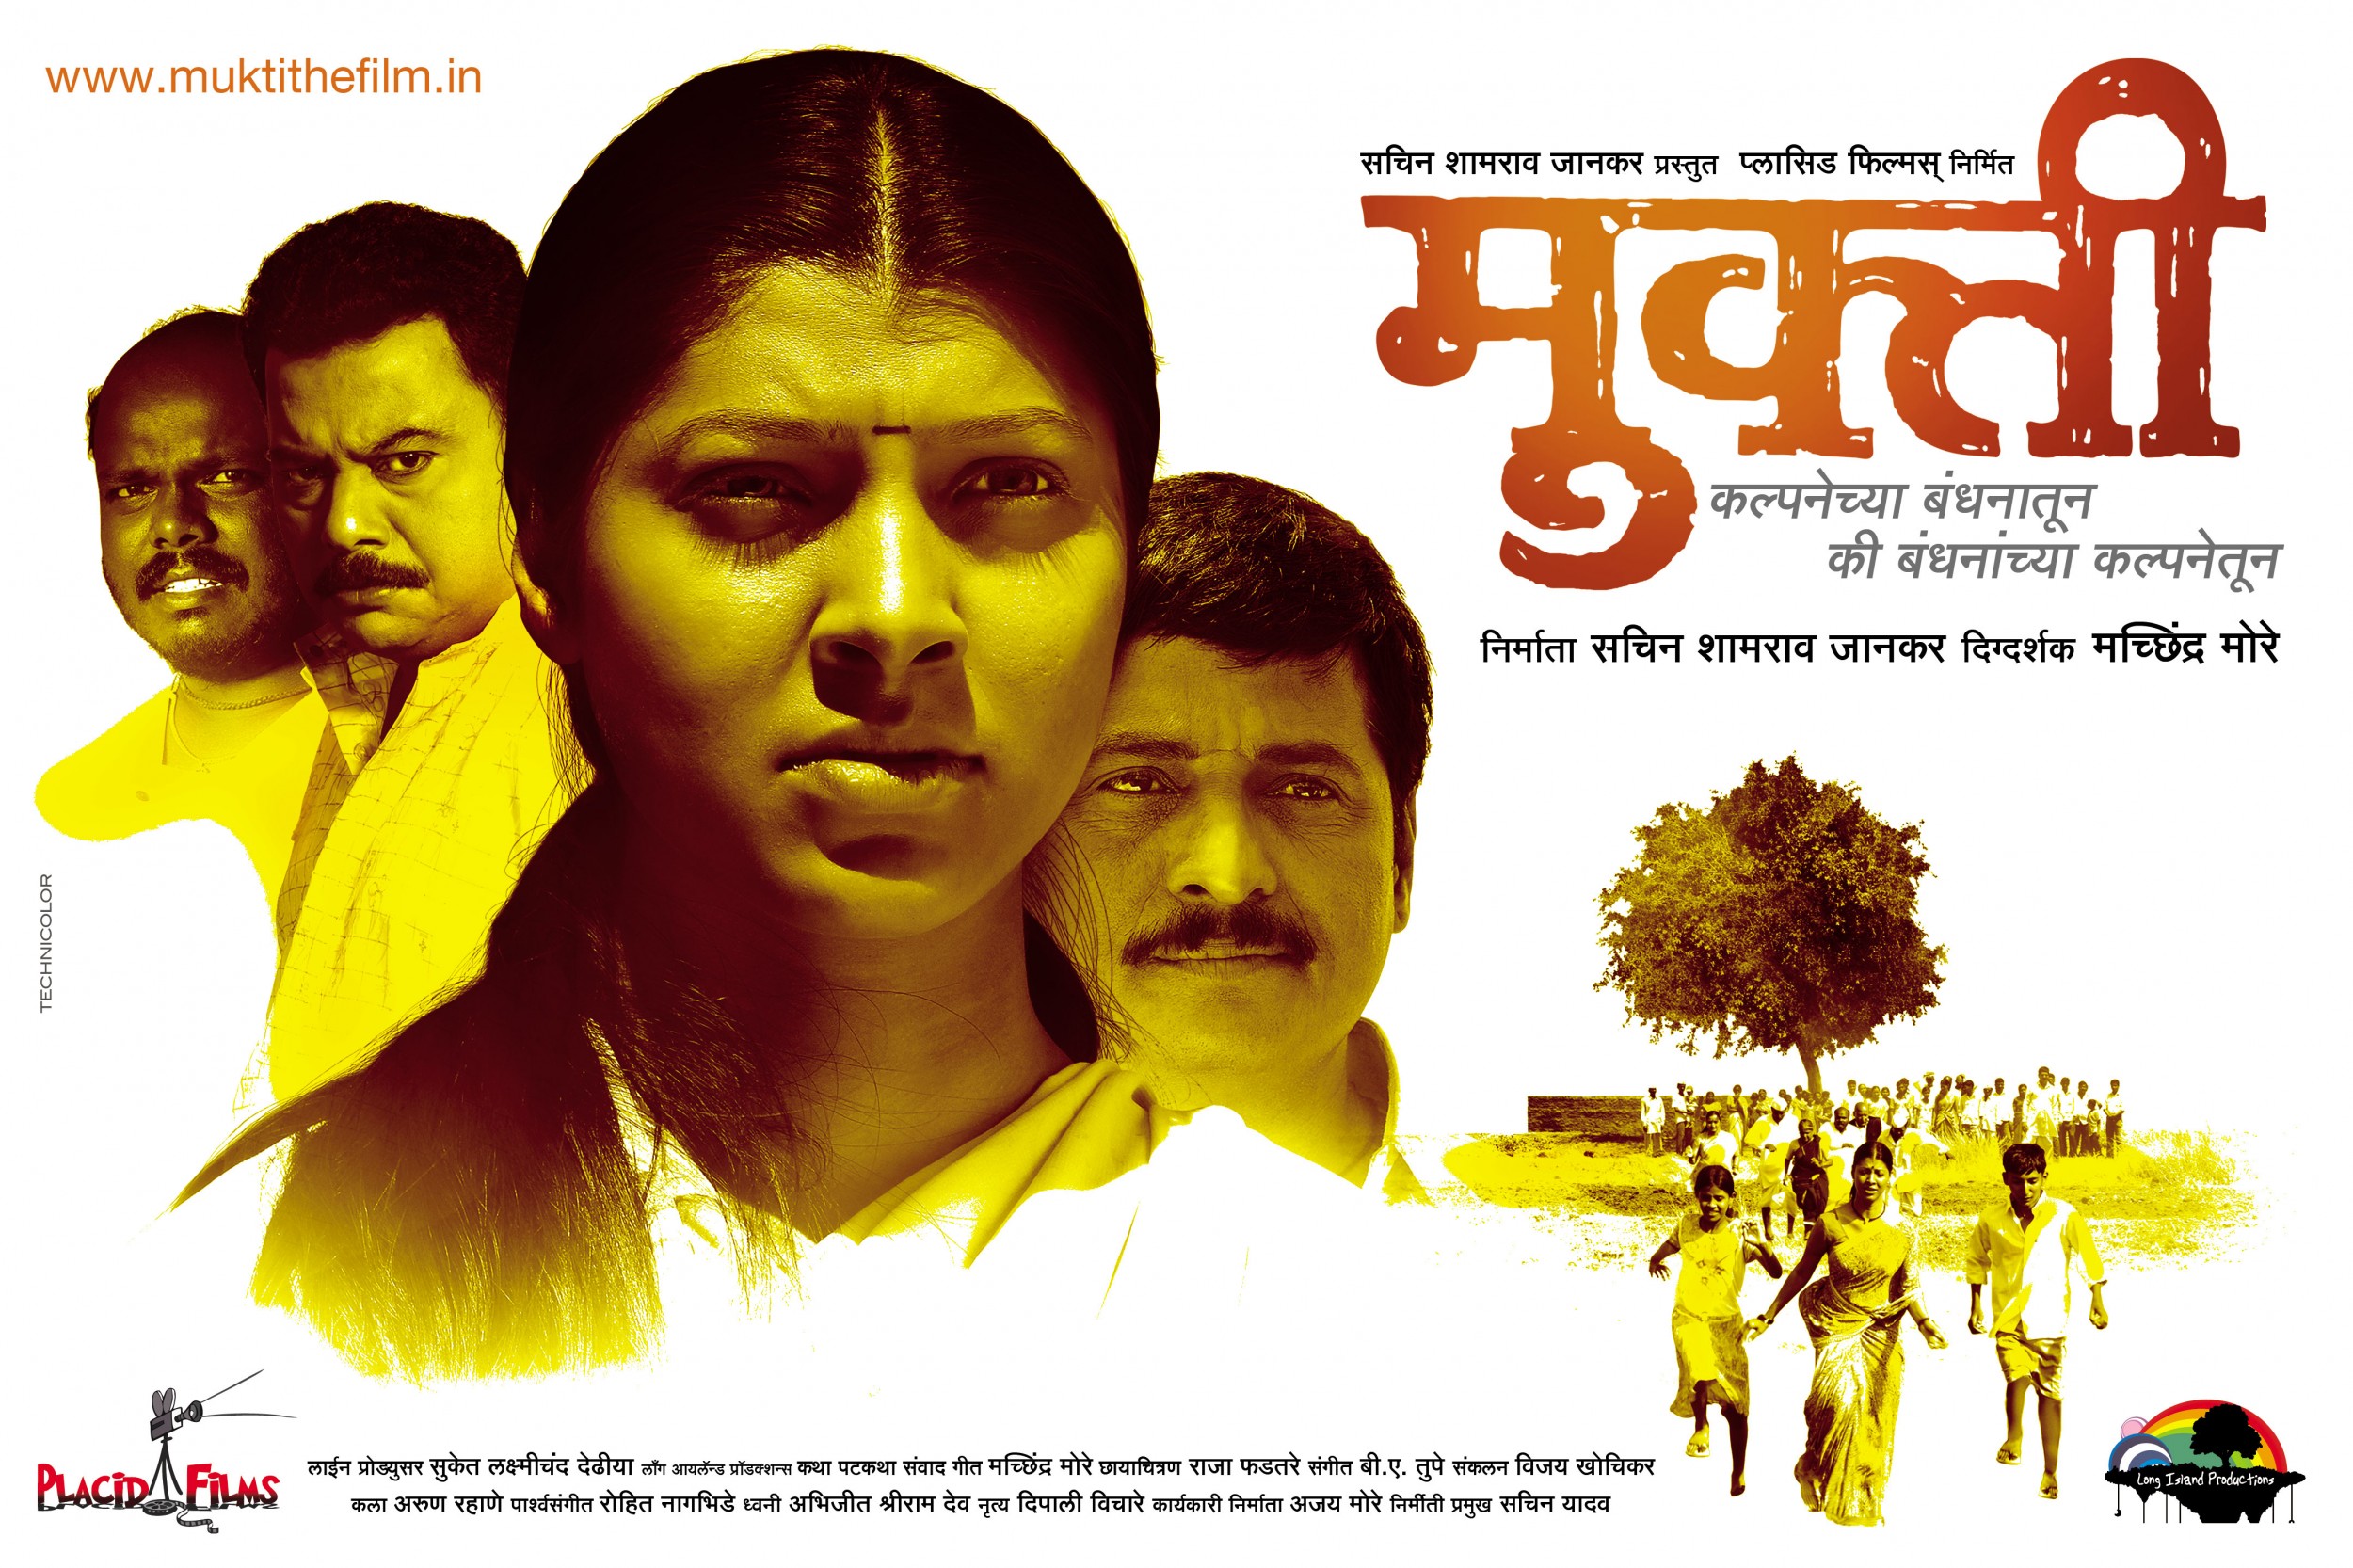 Mega Sized Movie Poster Image for Mukti (#7 of 7)